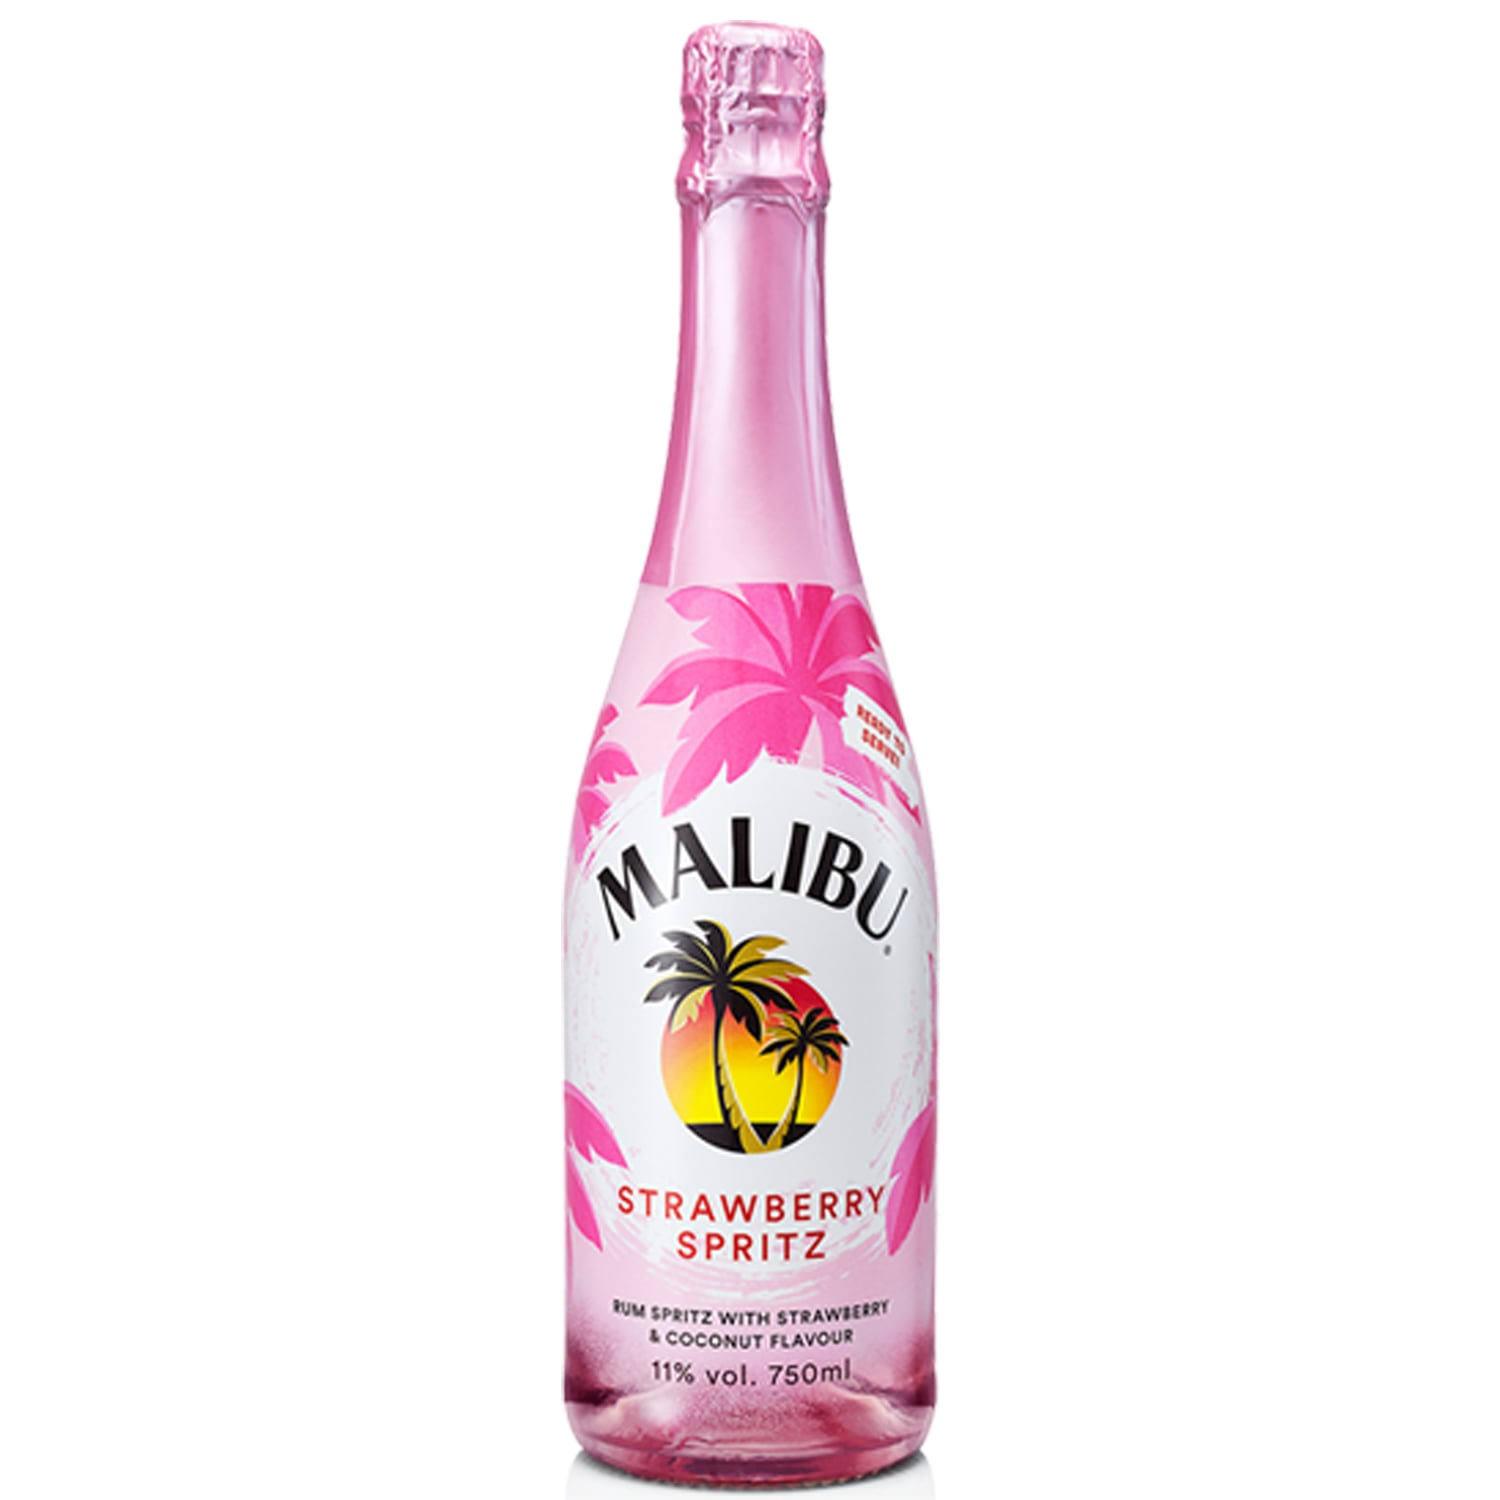 Malibu Caribbean Rum, Strawberry - 750 ml